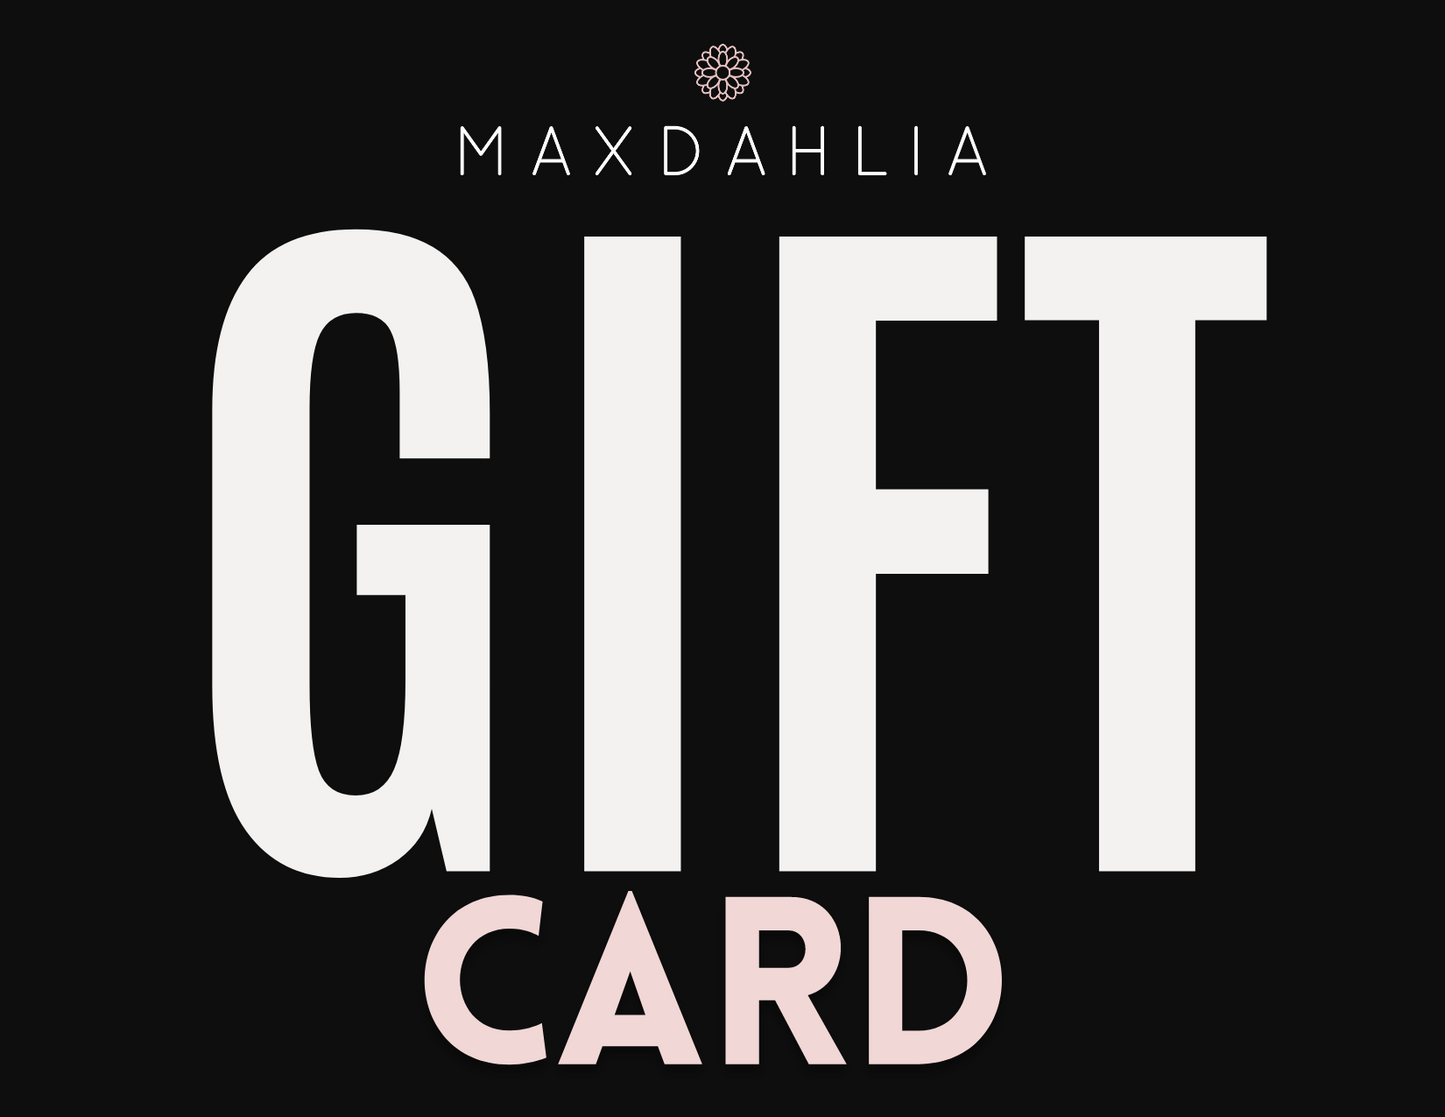 MAXDAHLIA Gift Card